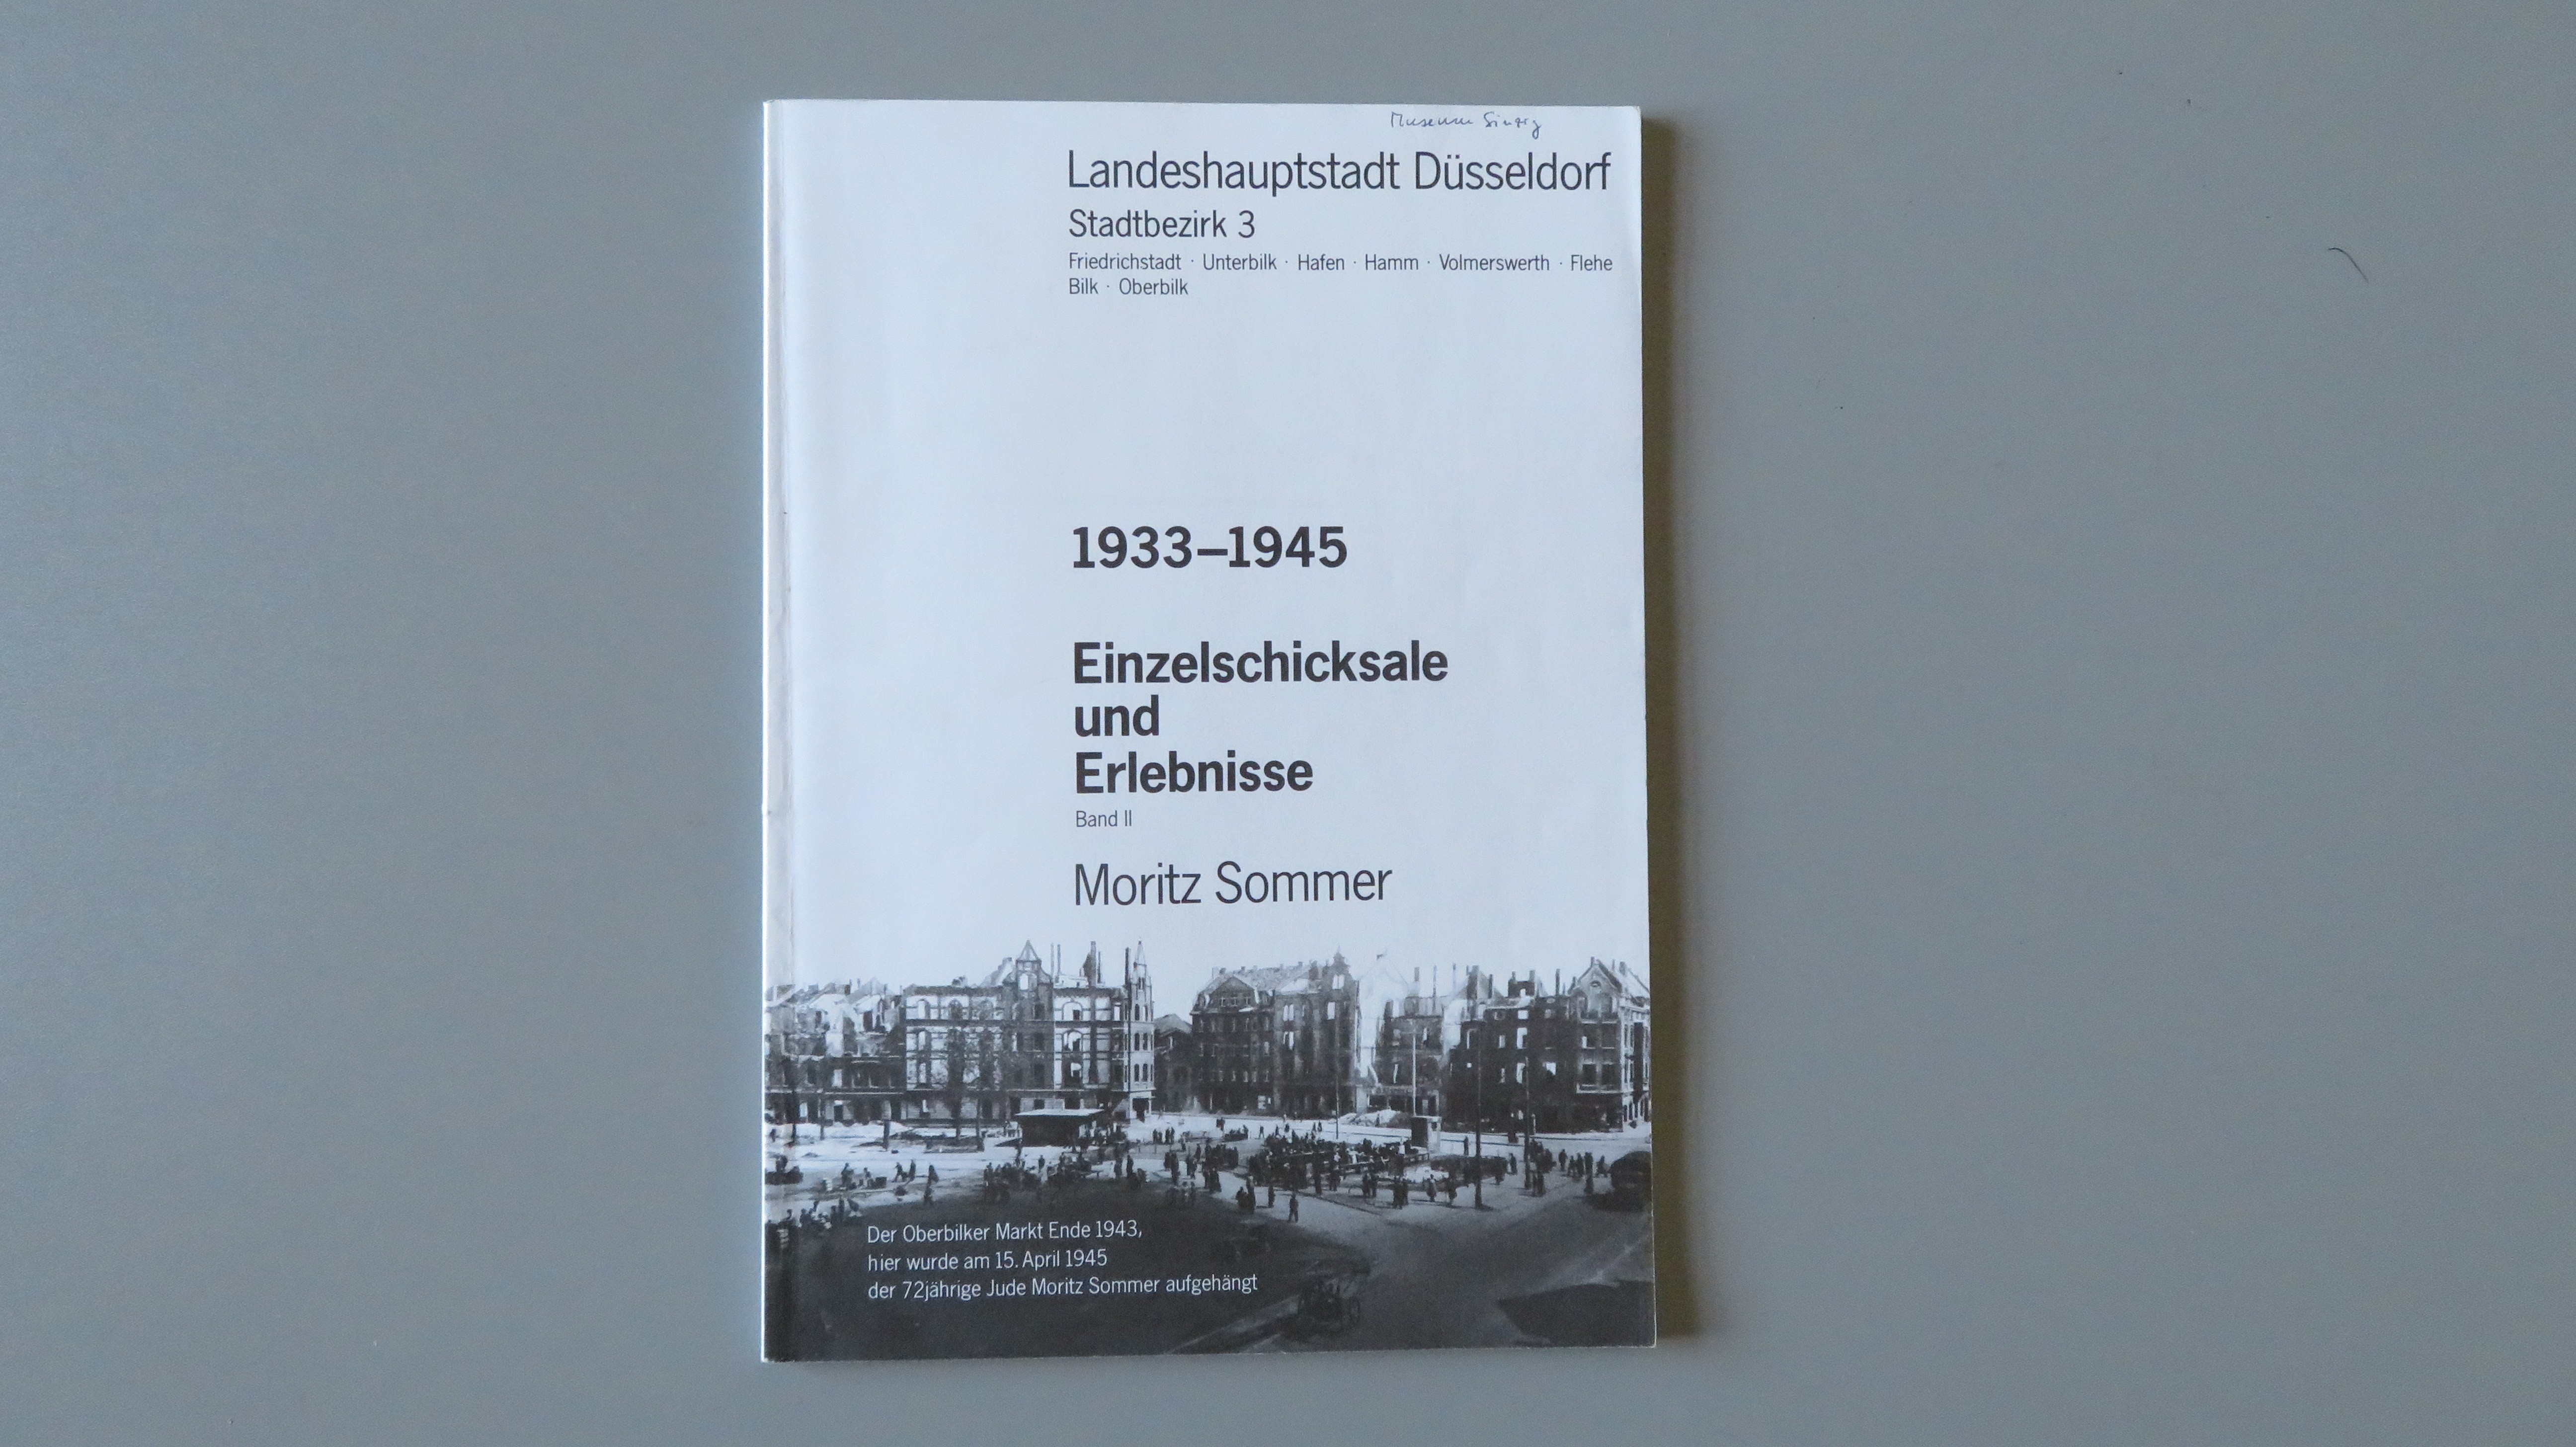 1933 - 1945 Landeshauptstadt Düsseldorf (Hardy Rehmann CC BY-NC-SA)